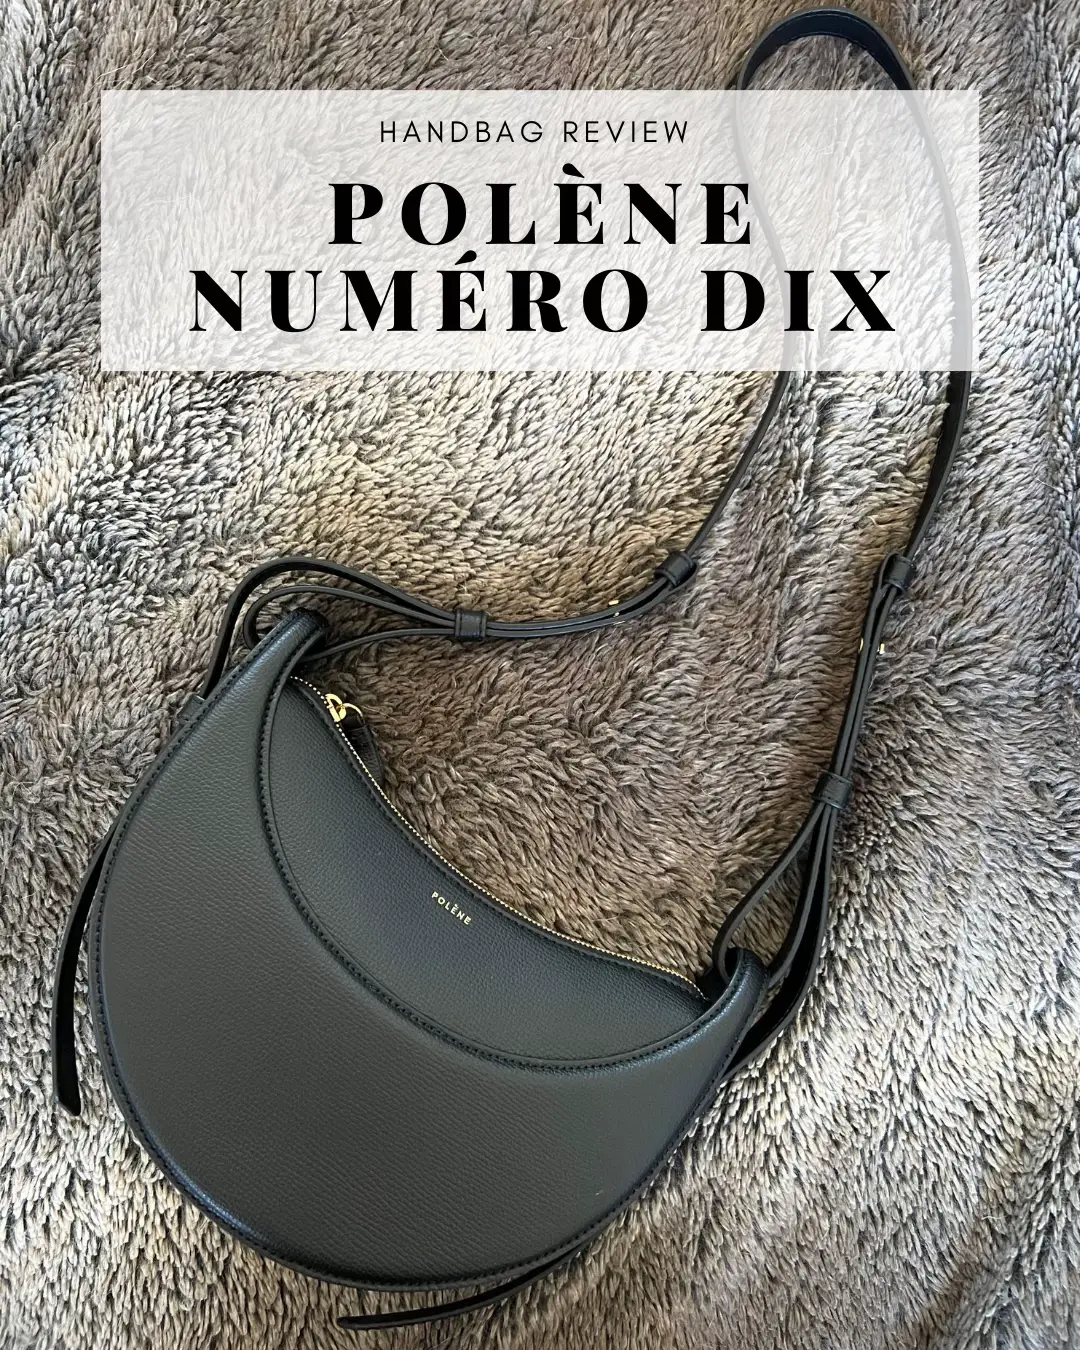 Polene Numero Dix, In-Depth Review, Pros & Cons